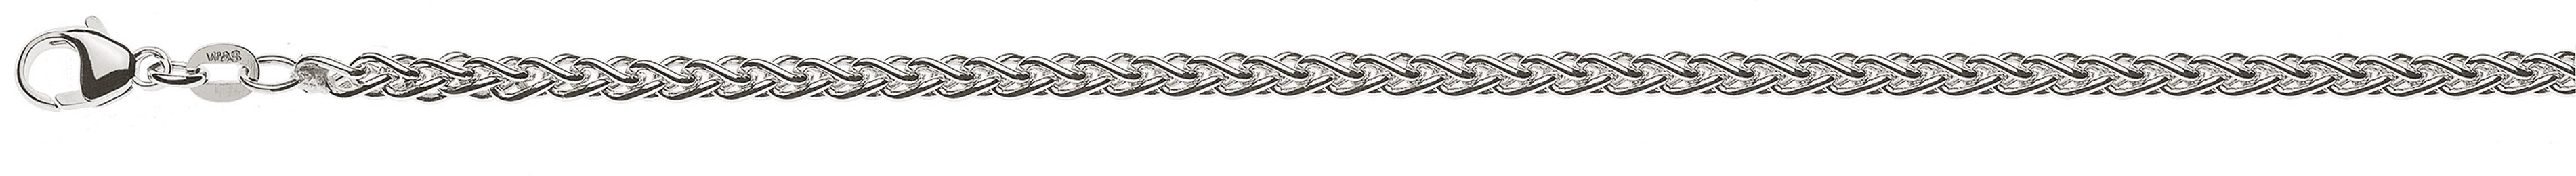 AURONOS Prestige Collier or blanc 18K chaîne câble 42cm 3.3mm